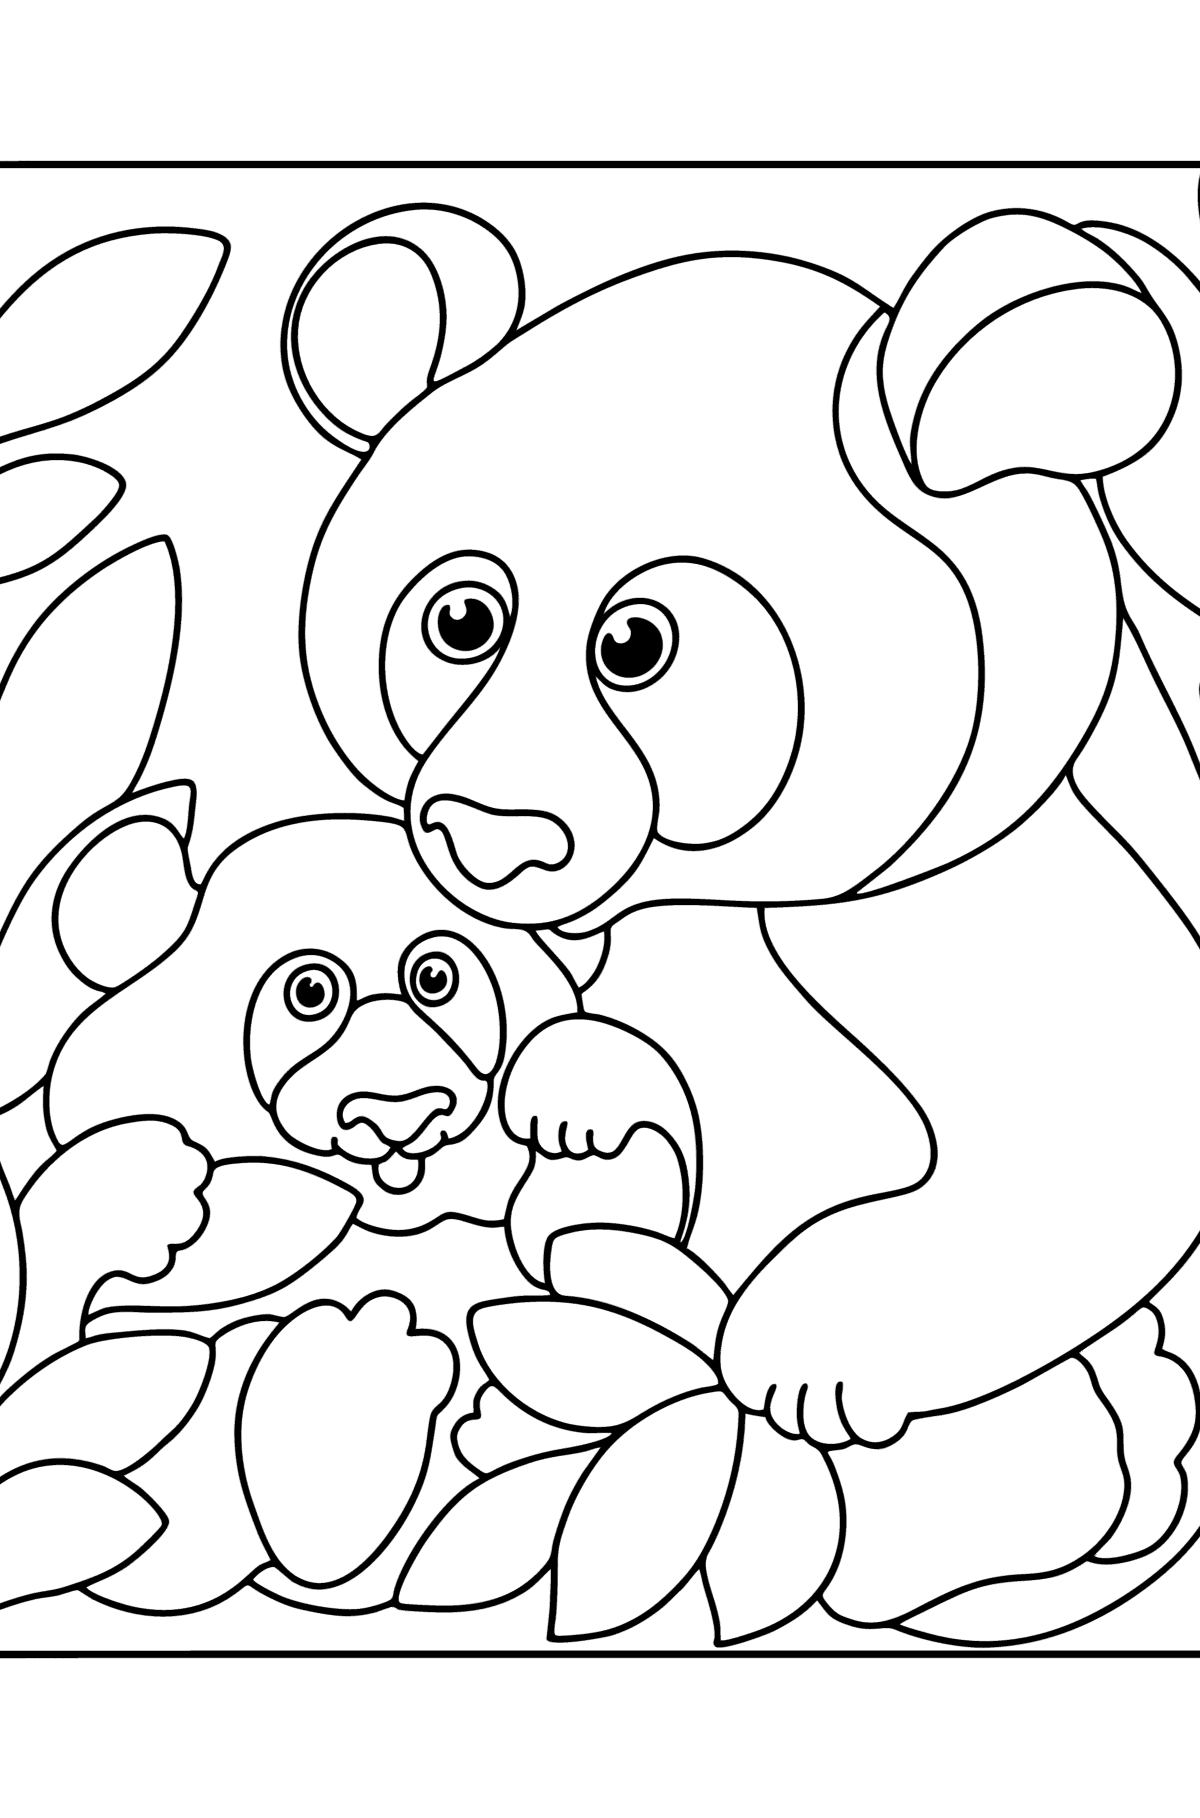 Dibujo de panda gigante con un cachorro para colorear - Dibujos para Colorear para Niños